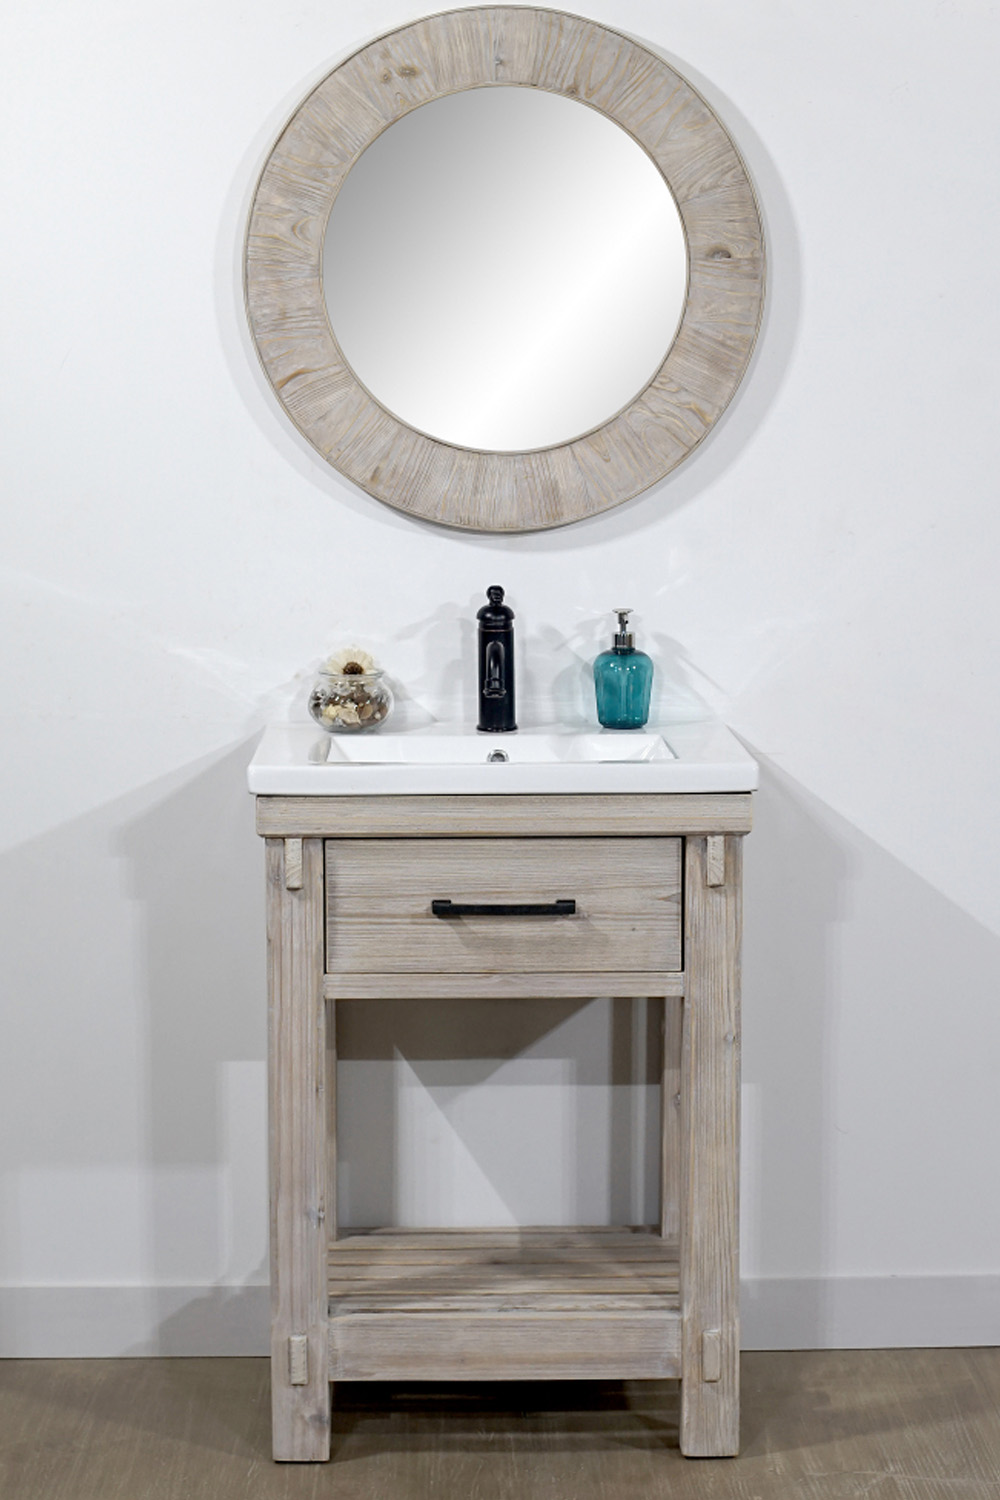 24" Rustic Solid Fir Single Sink Bathroom Vanity with Ceramic Top - No Faucet